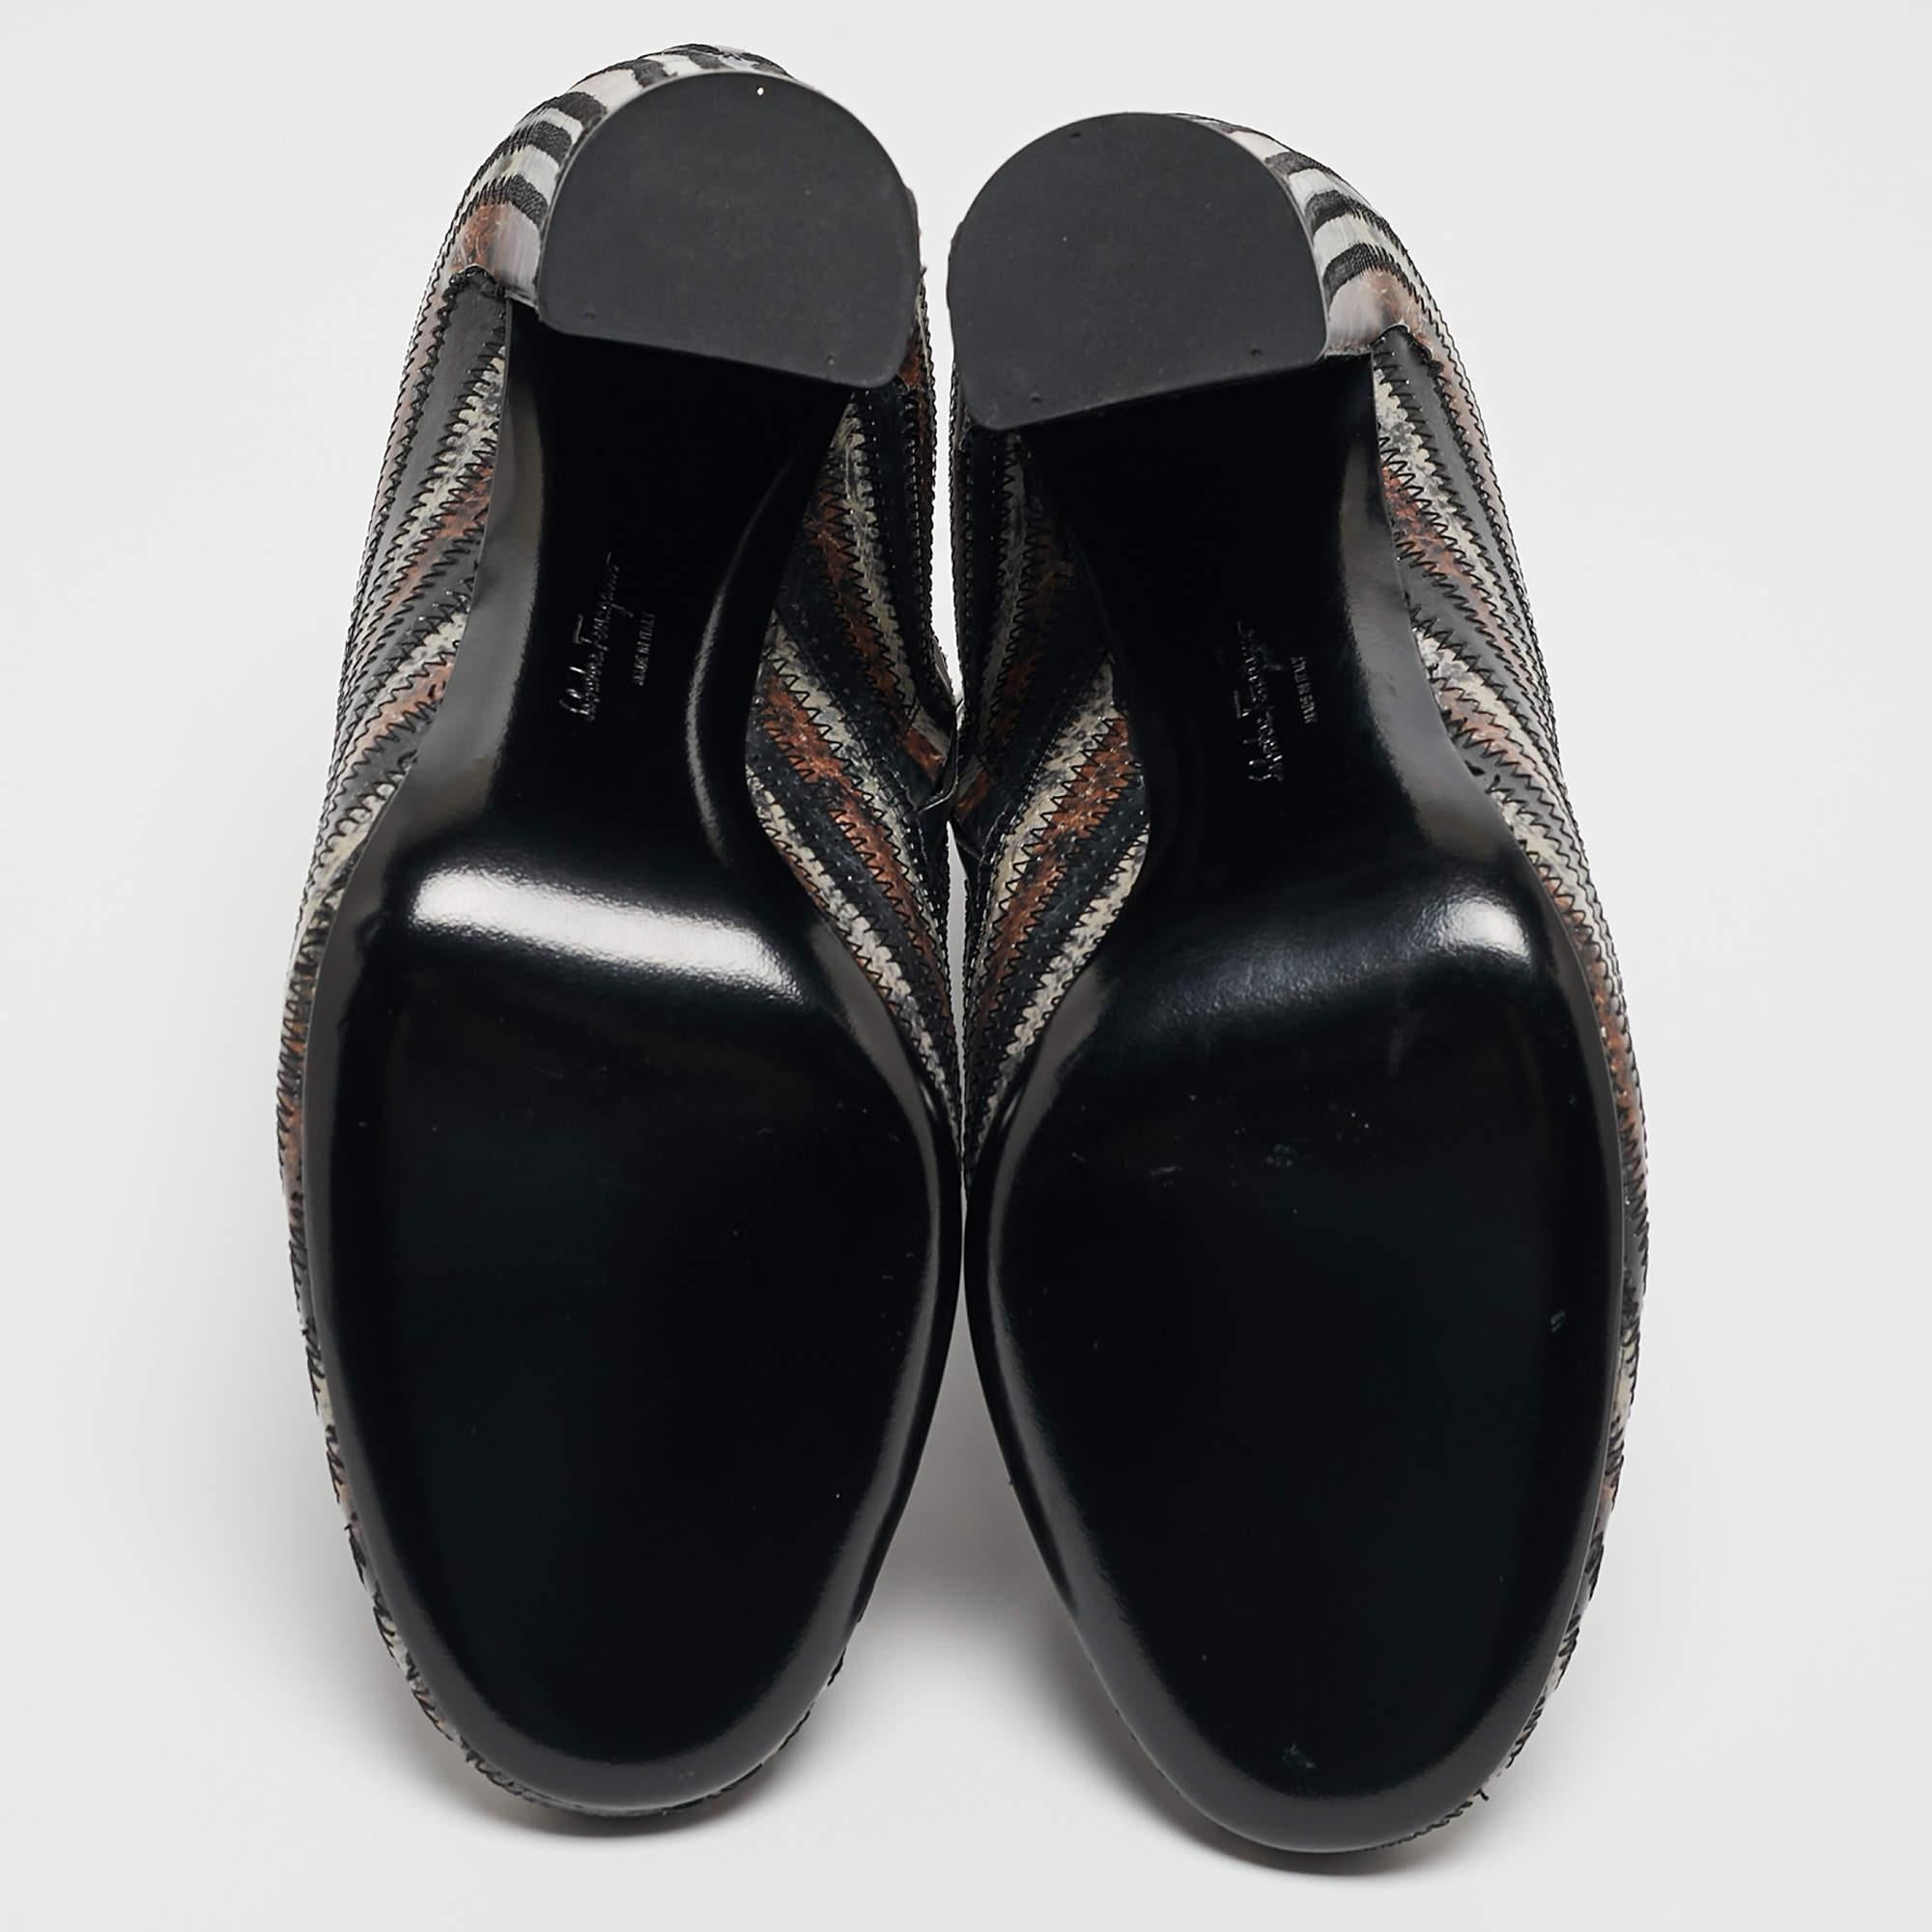 Salvatore Ferragamo Multicolor Leather Ankle Boots Size 37.5 For Sale 3